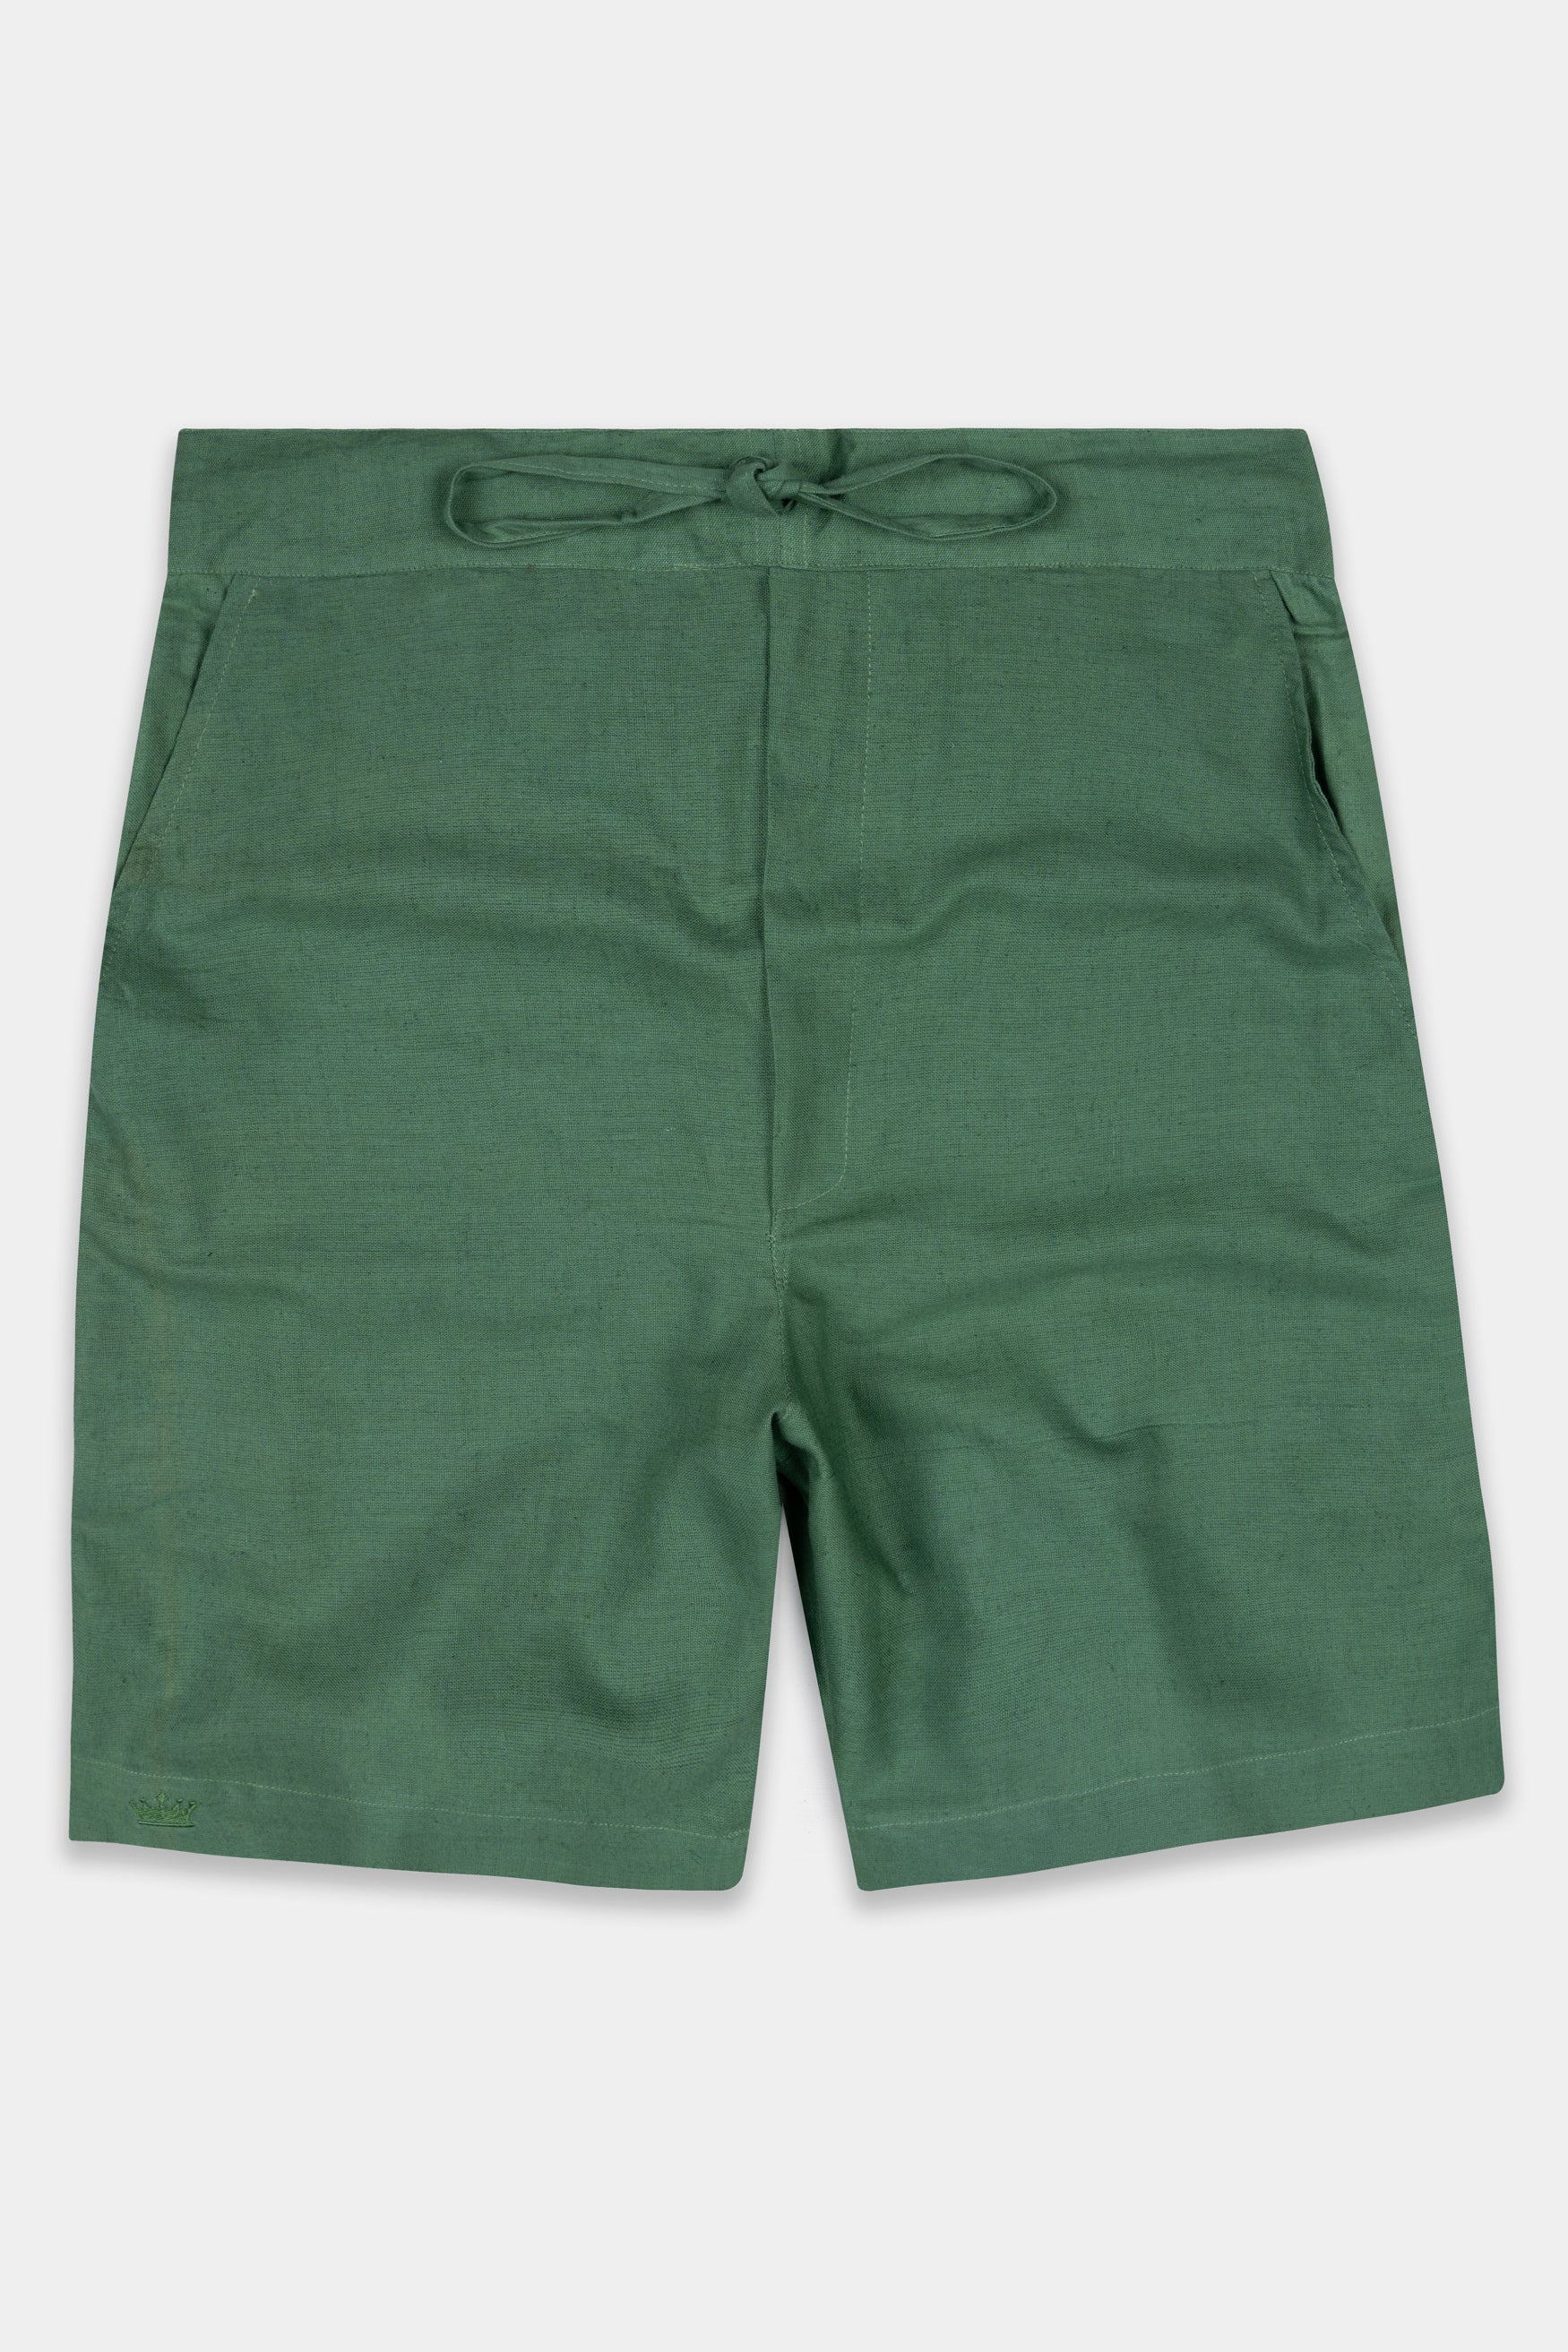 Tom Thumb Green Textured Luxurious Linen Shorts